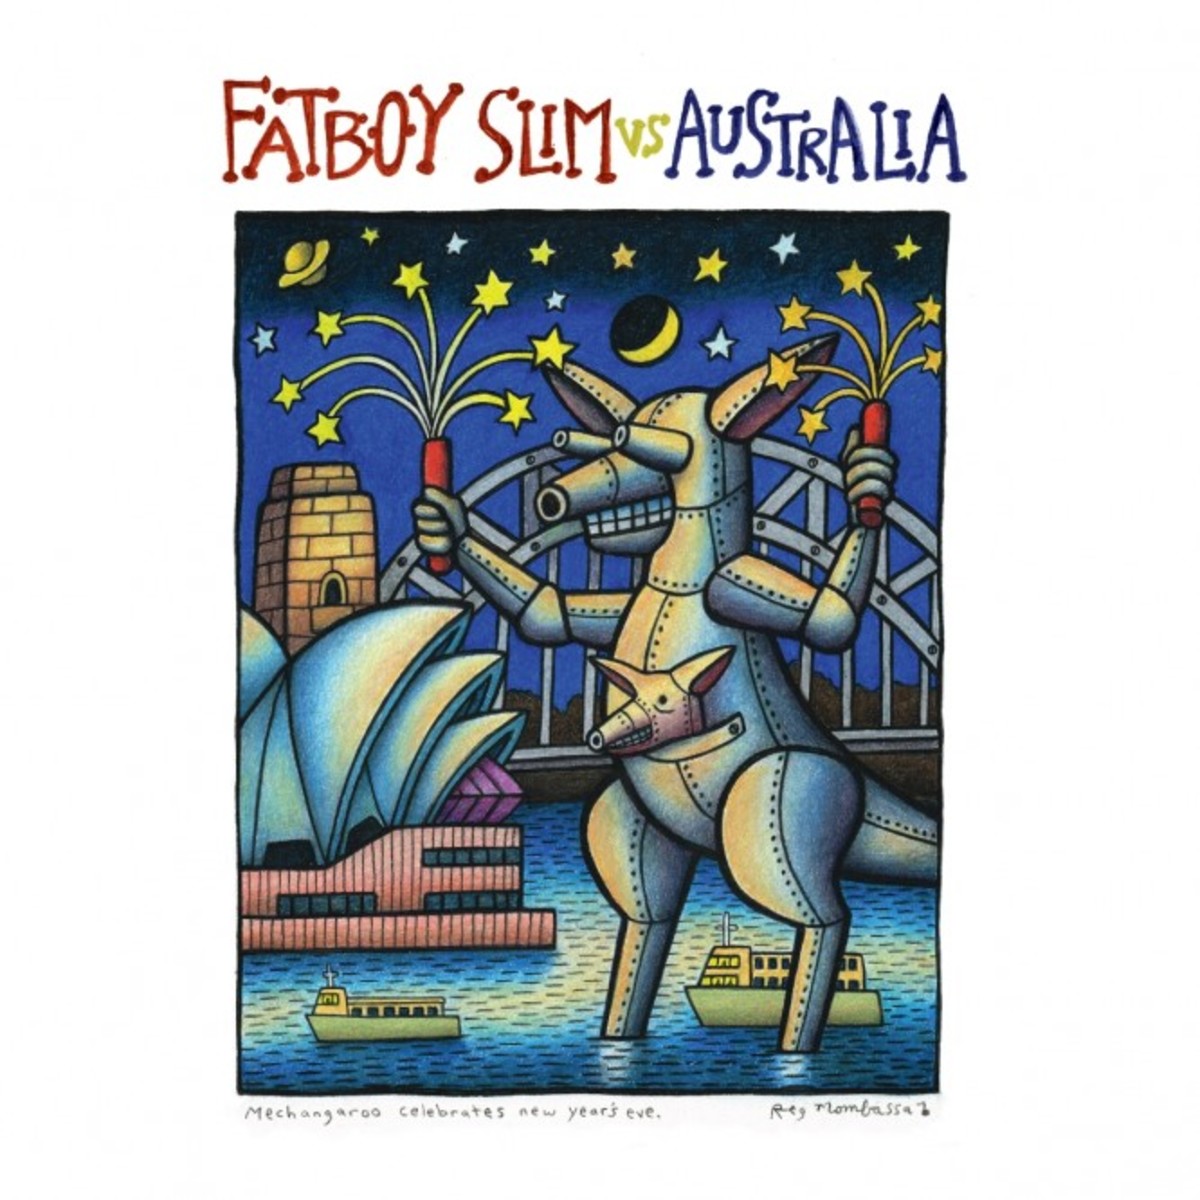 Fbs vs Australia EP artwork